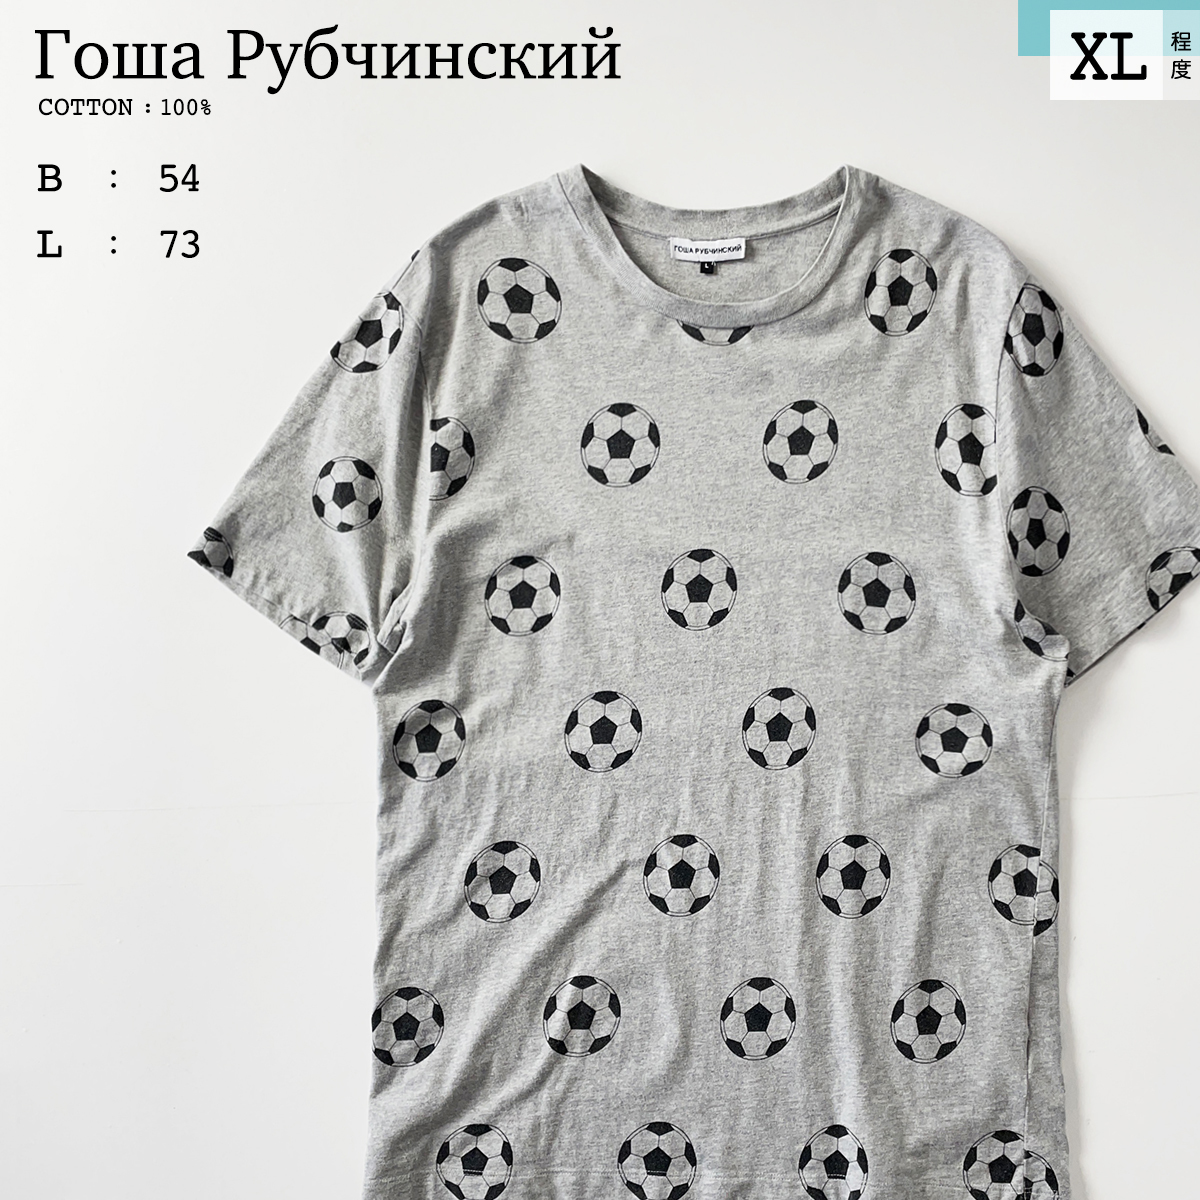 Gosha Rubchinskiy サッカーボール ドット 柄 プリント 半袖 Tシャツ